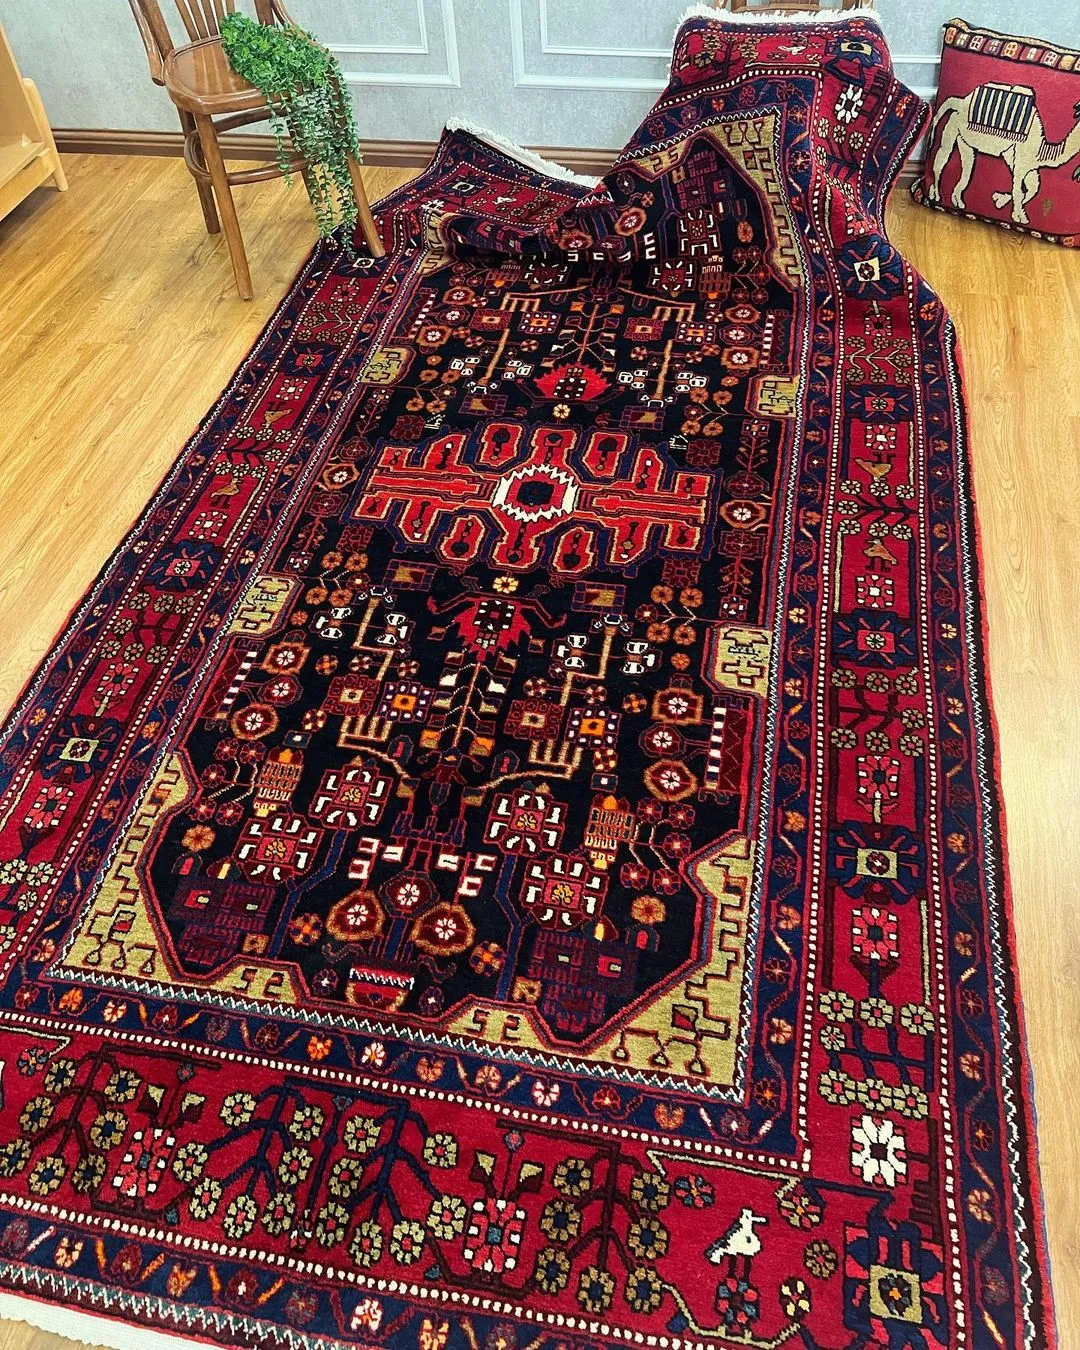 Iranian rug designs